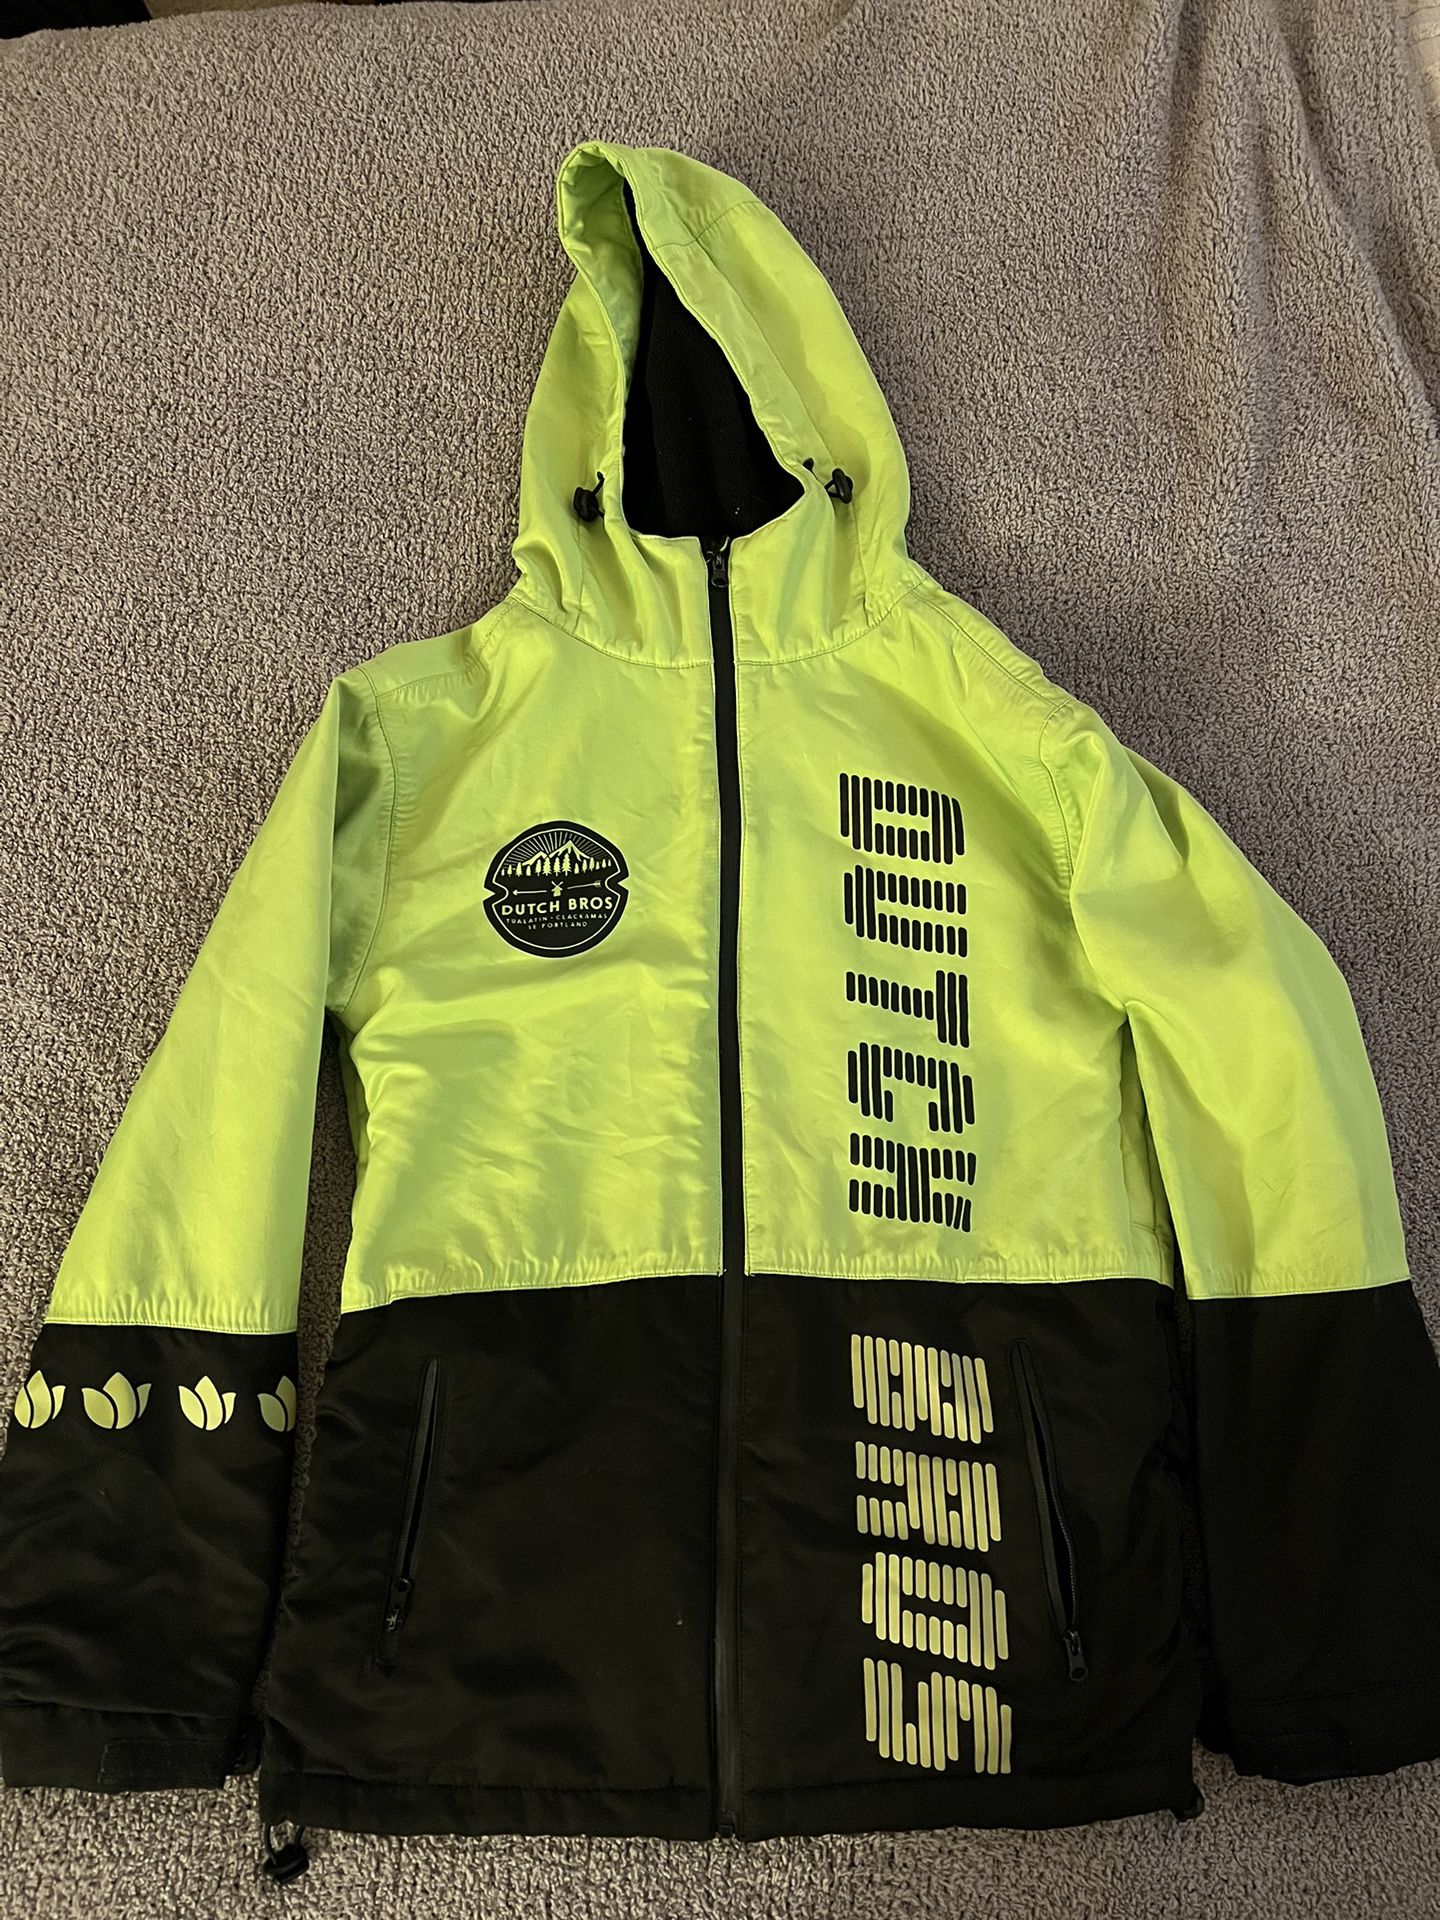 Dutch Bros Neon Rain Jacket